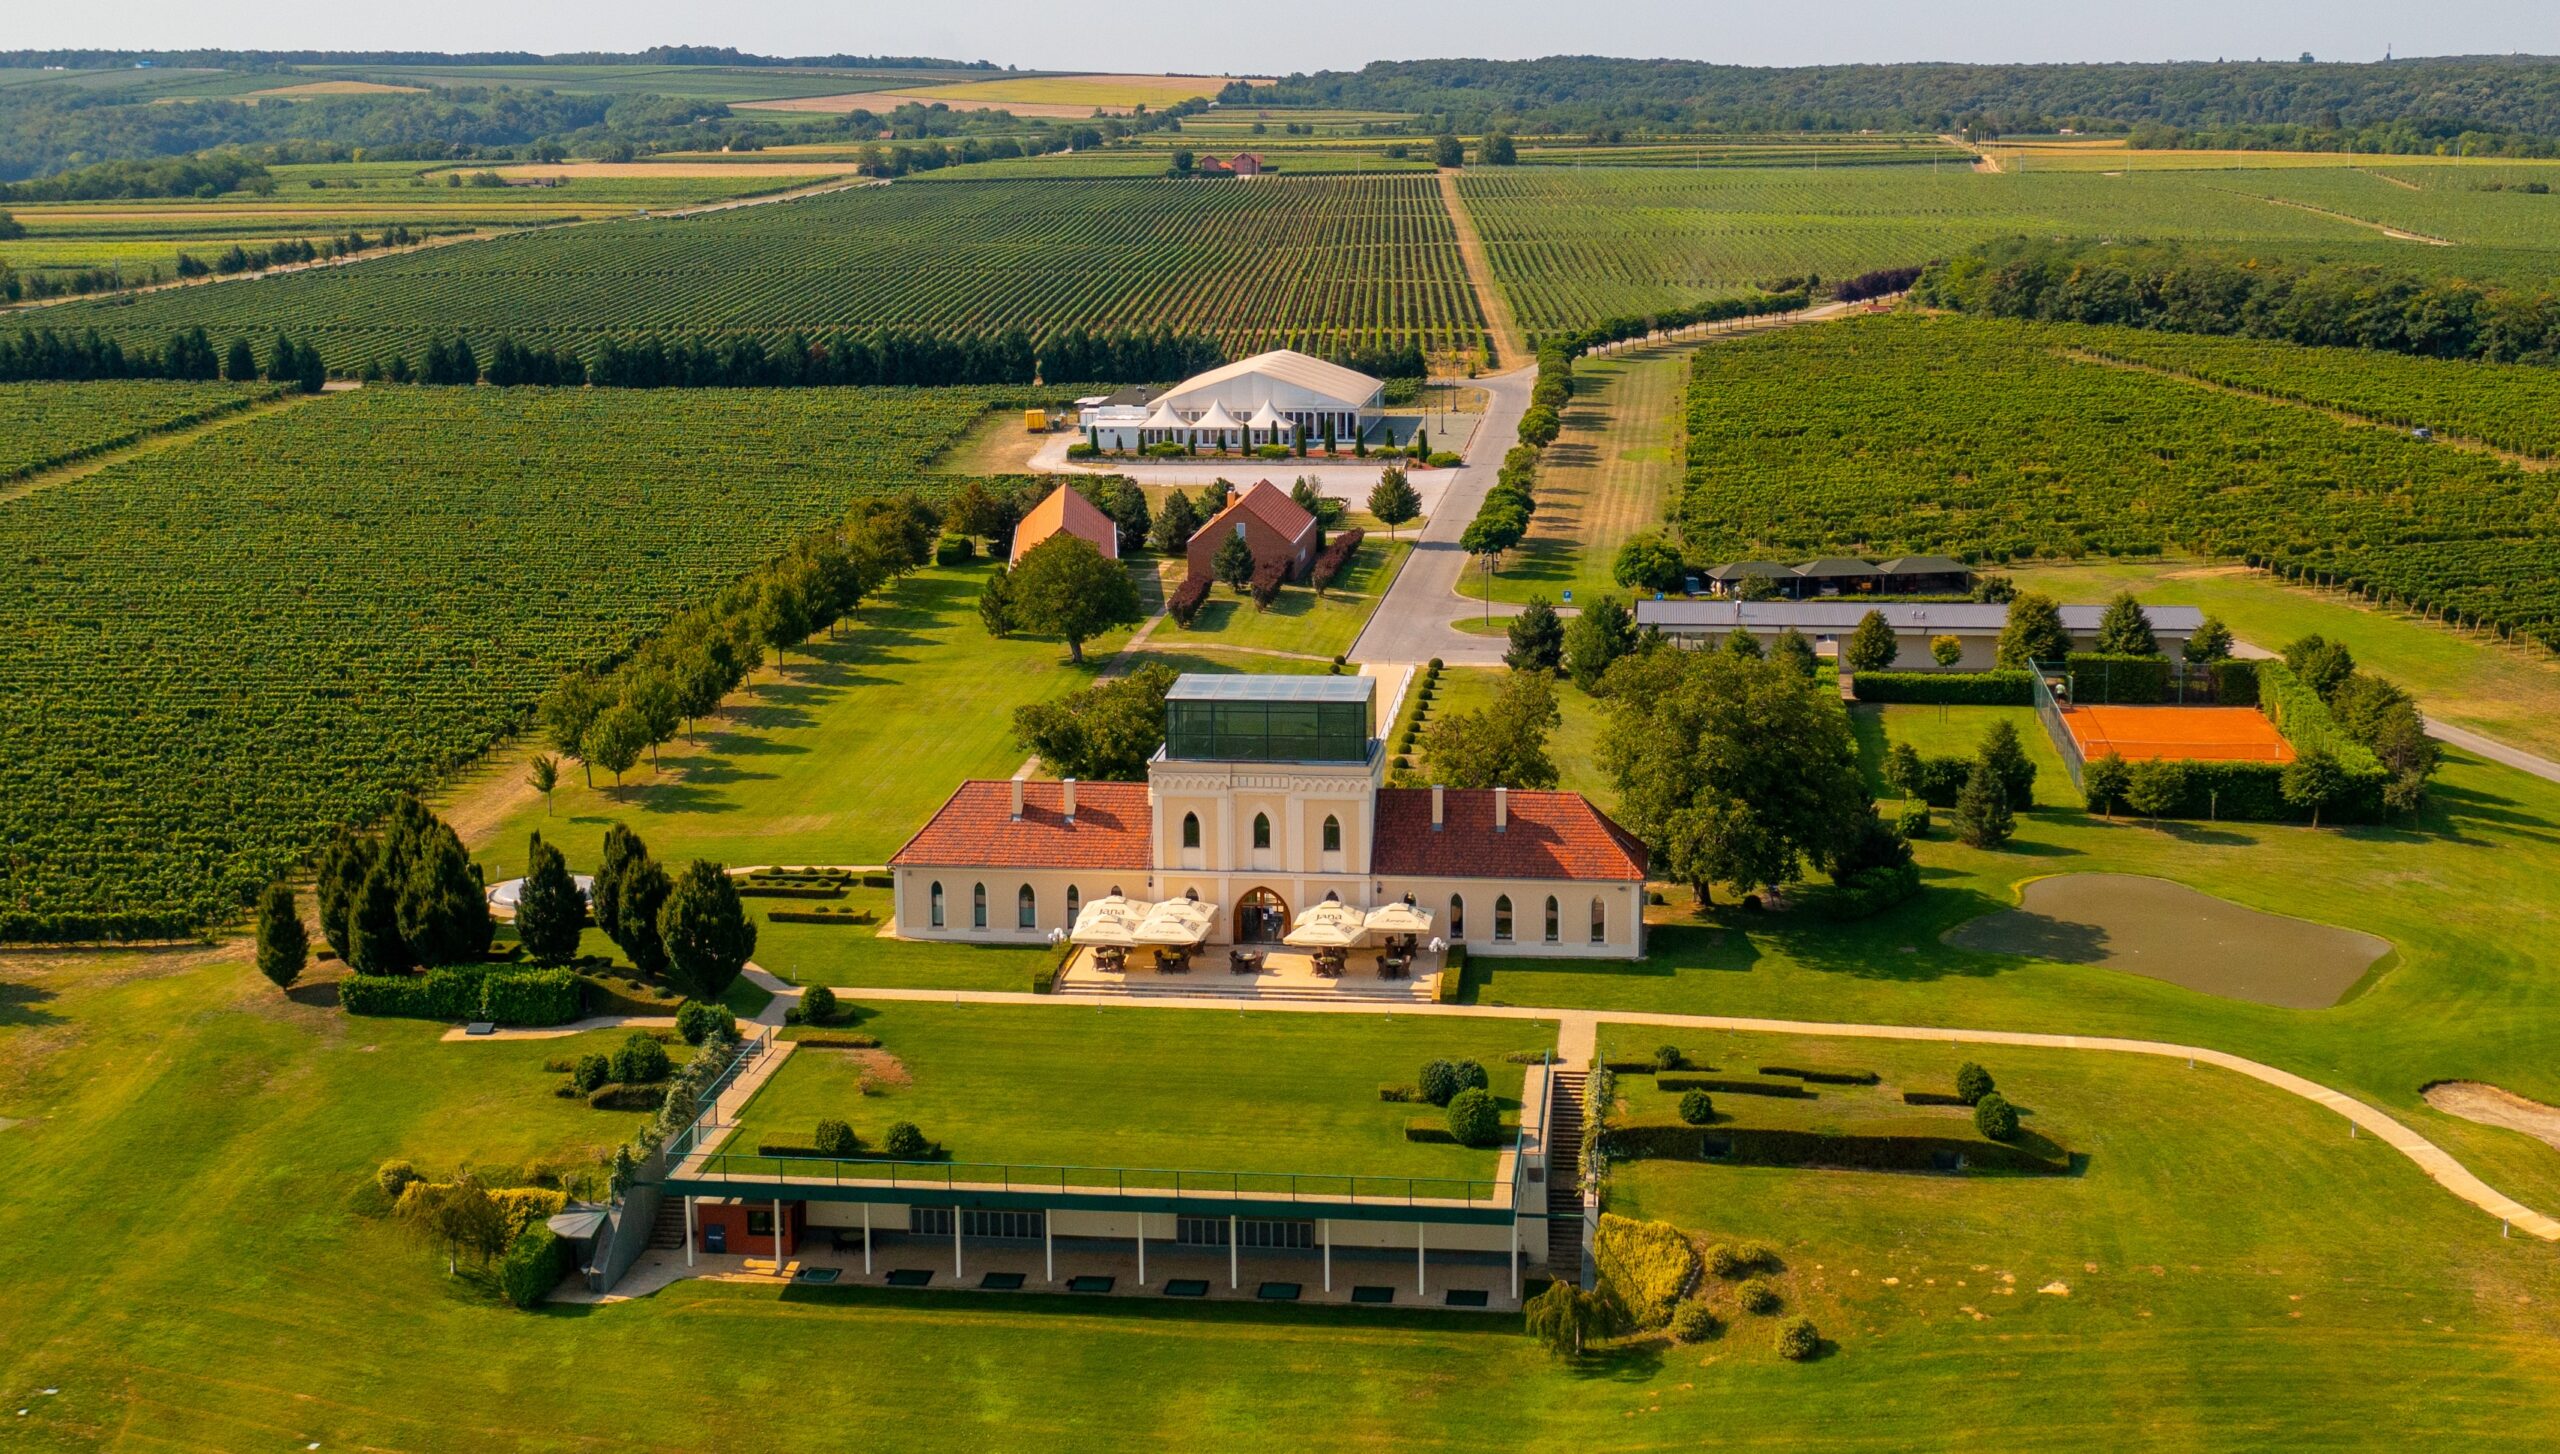 Image of Principovac vineyard of Ilok Cellars winery